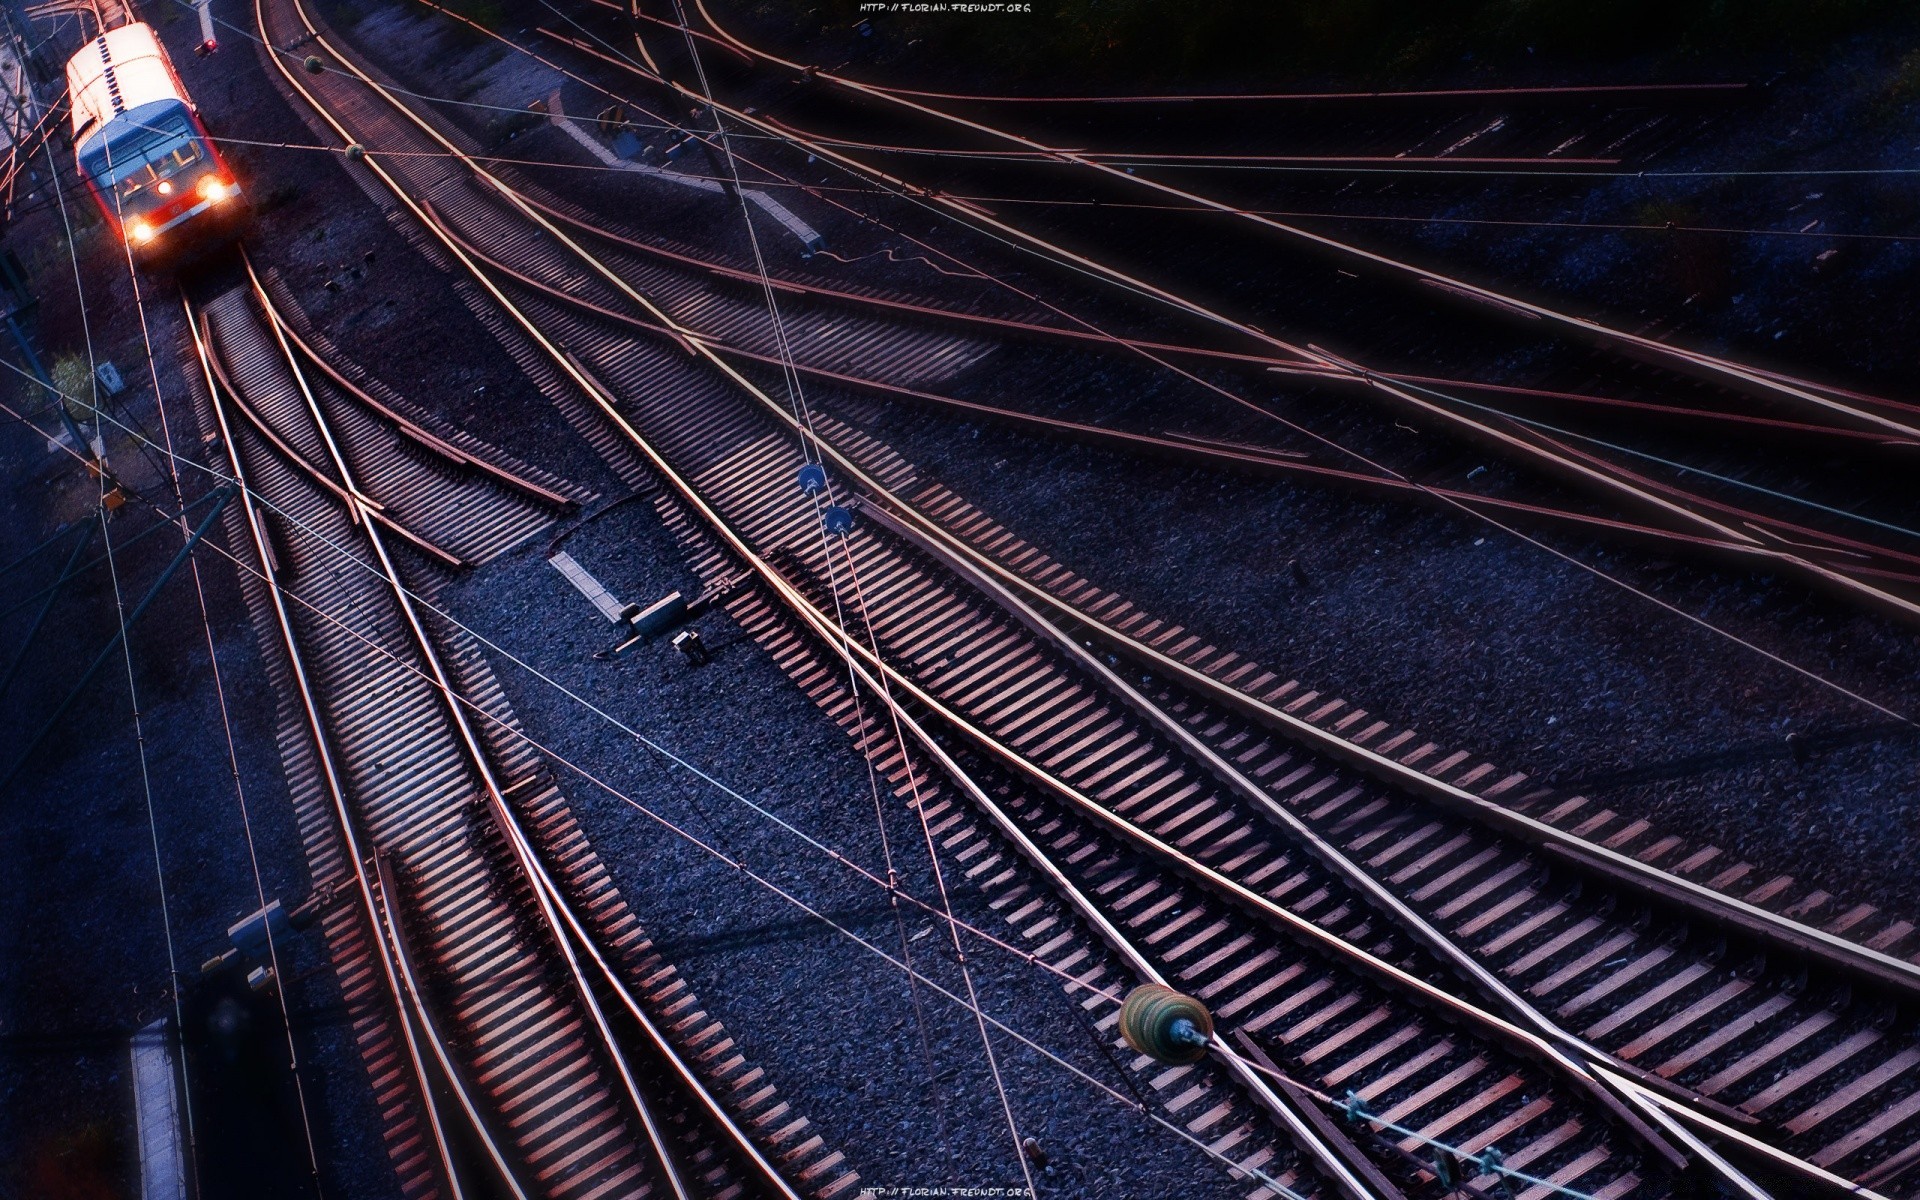 trains steel industry transportation system technology light